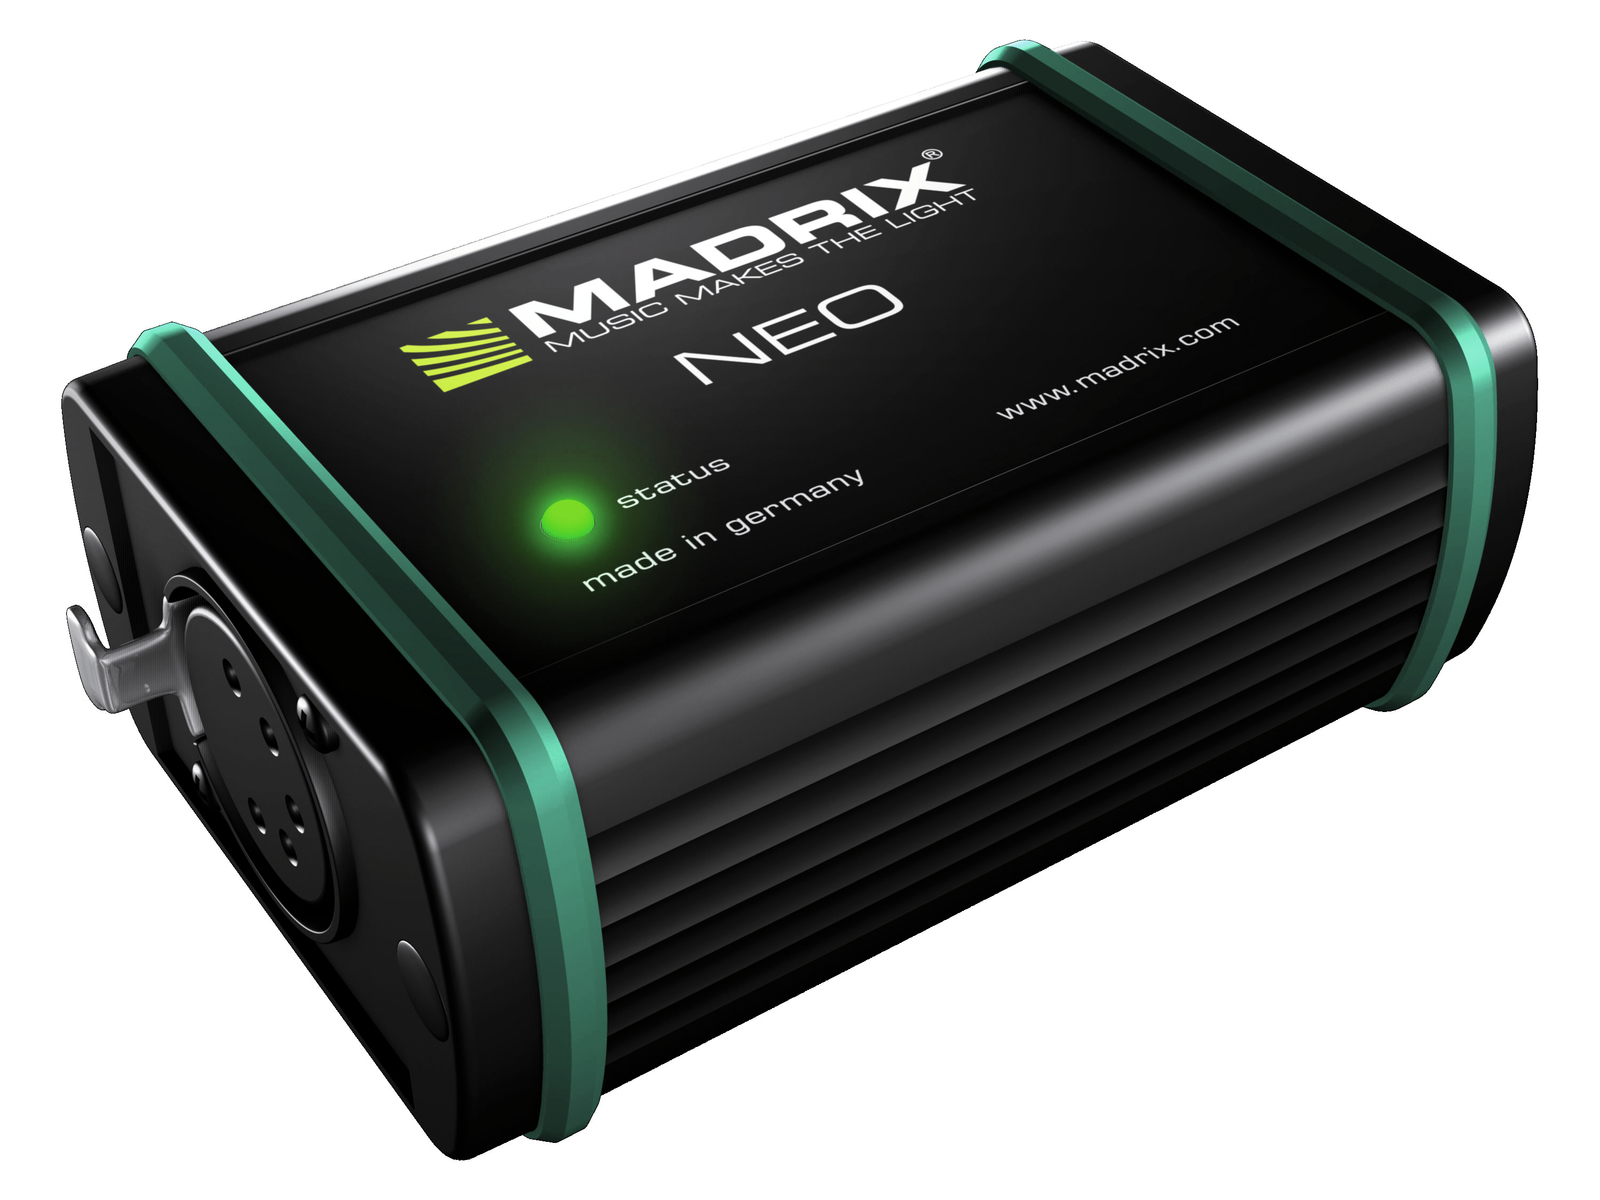 MADRIX NEO - USB-DMX512-Interface